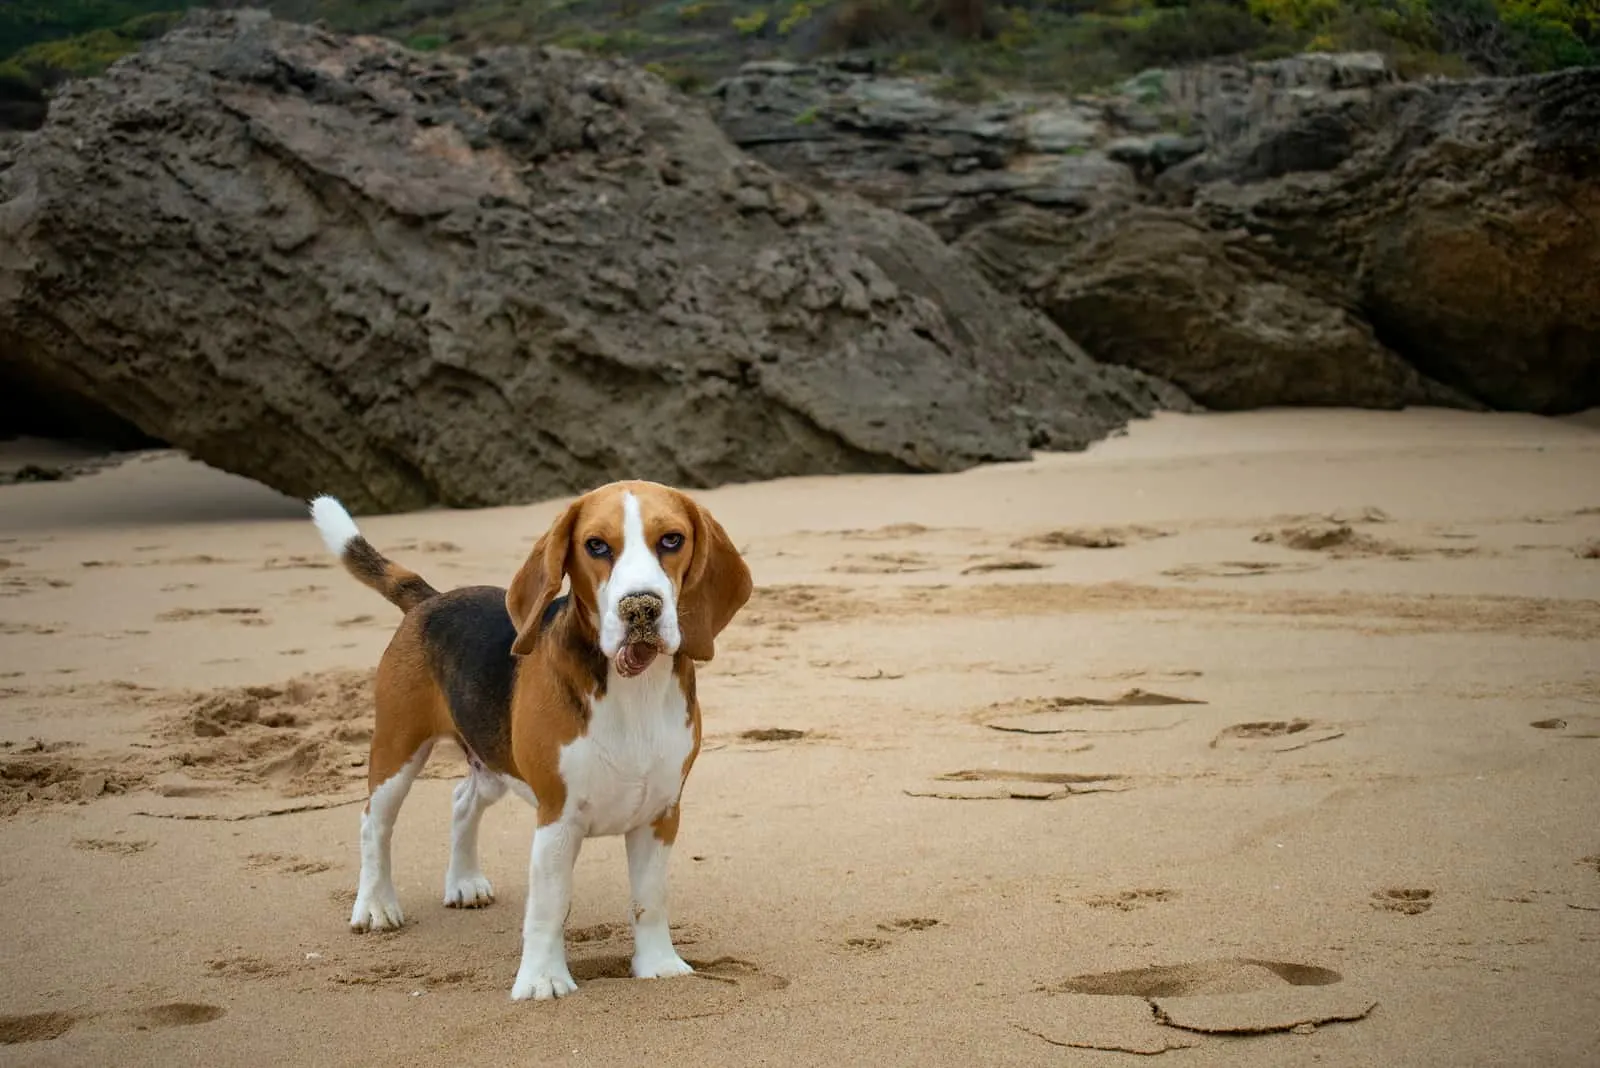 a beagle dog stands on a sandy beach